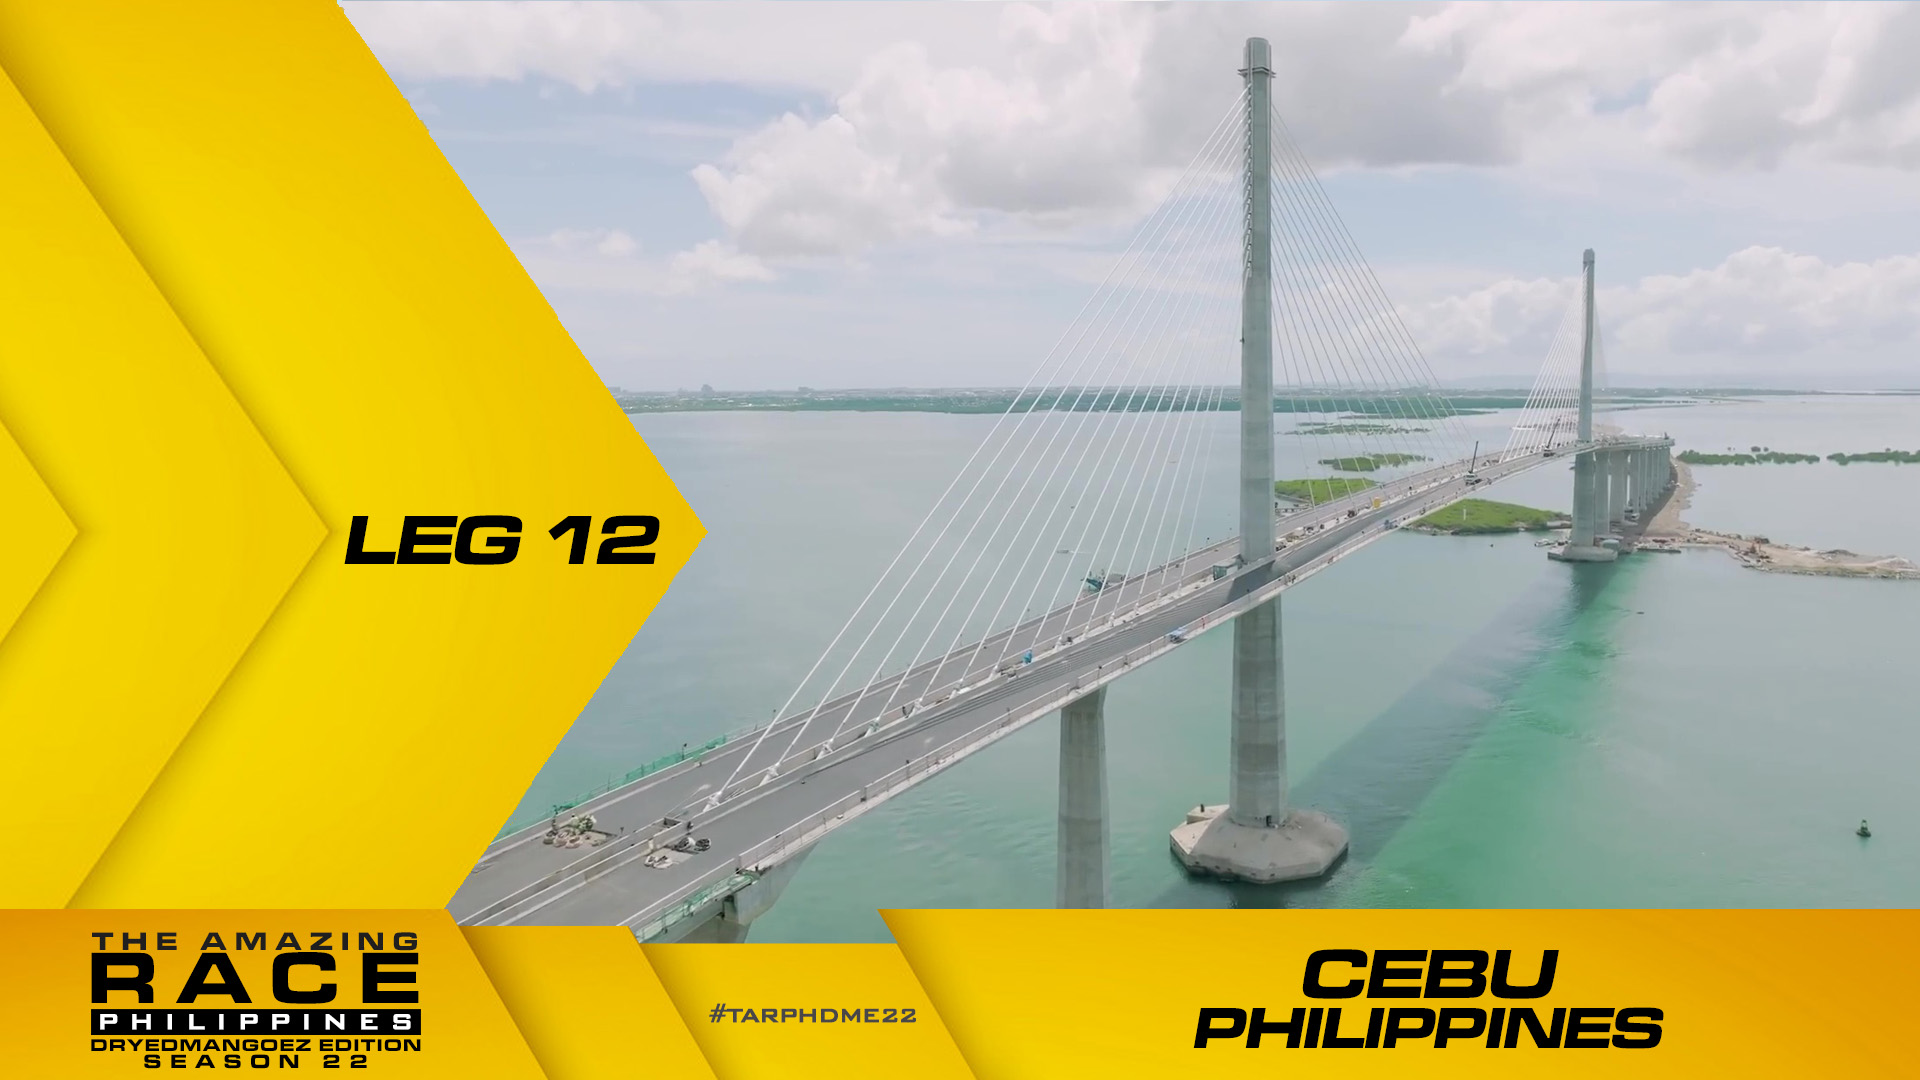 The Amazing Race Philippines: DryedMangoez Edition Season 22, Leg 12 – Cebu, Philippines